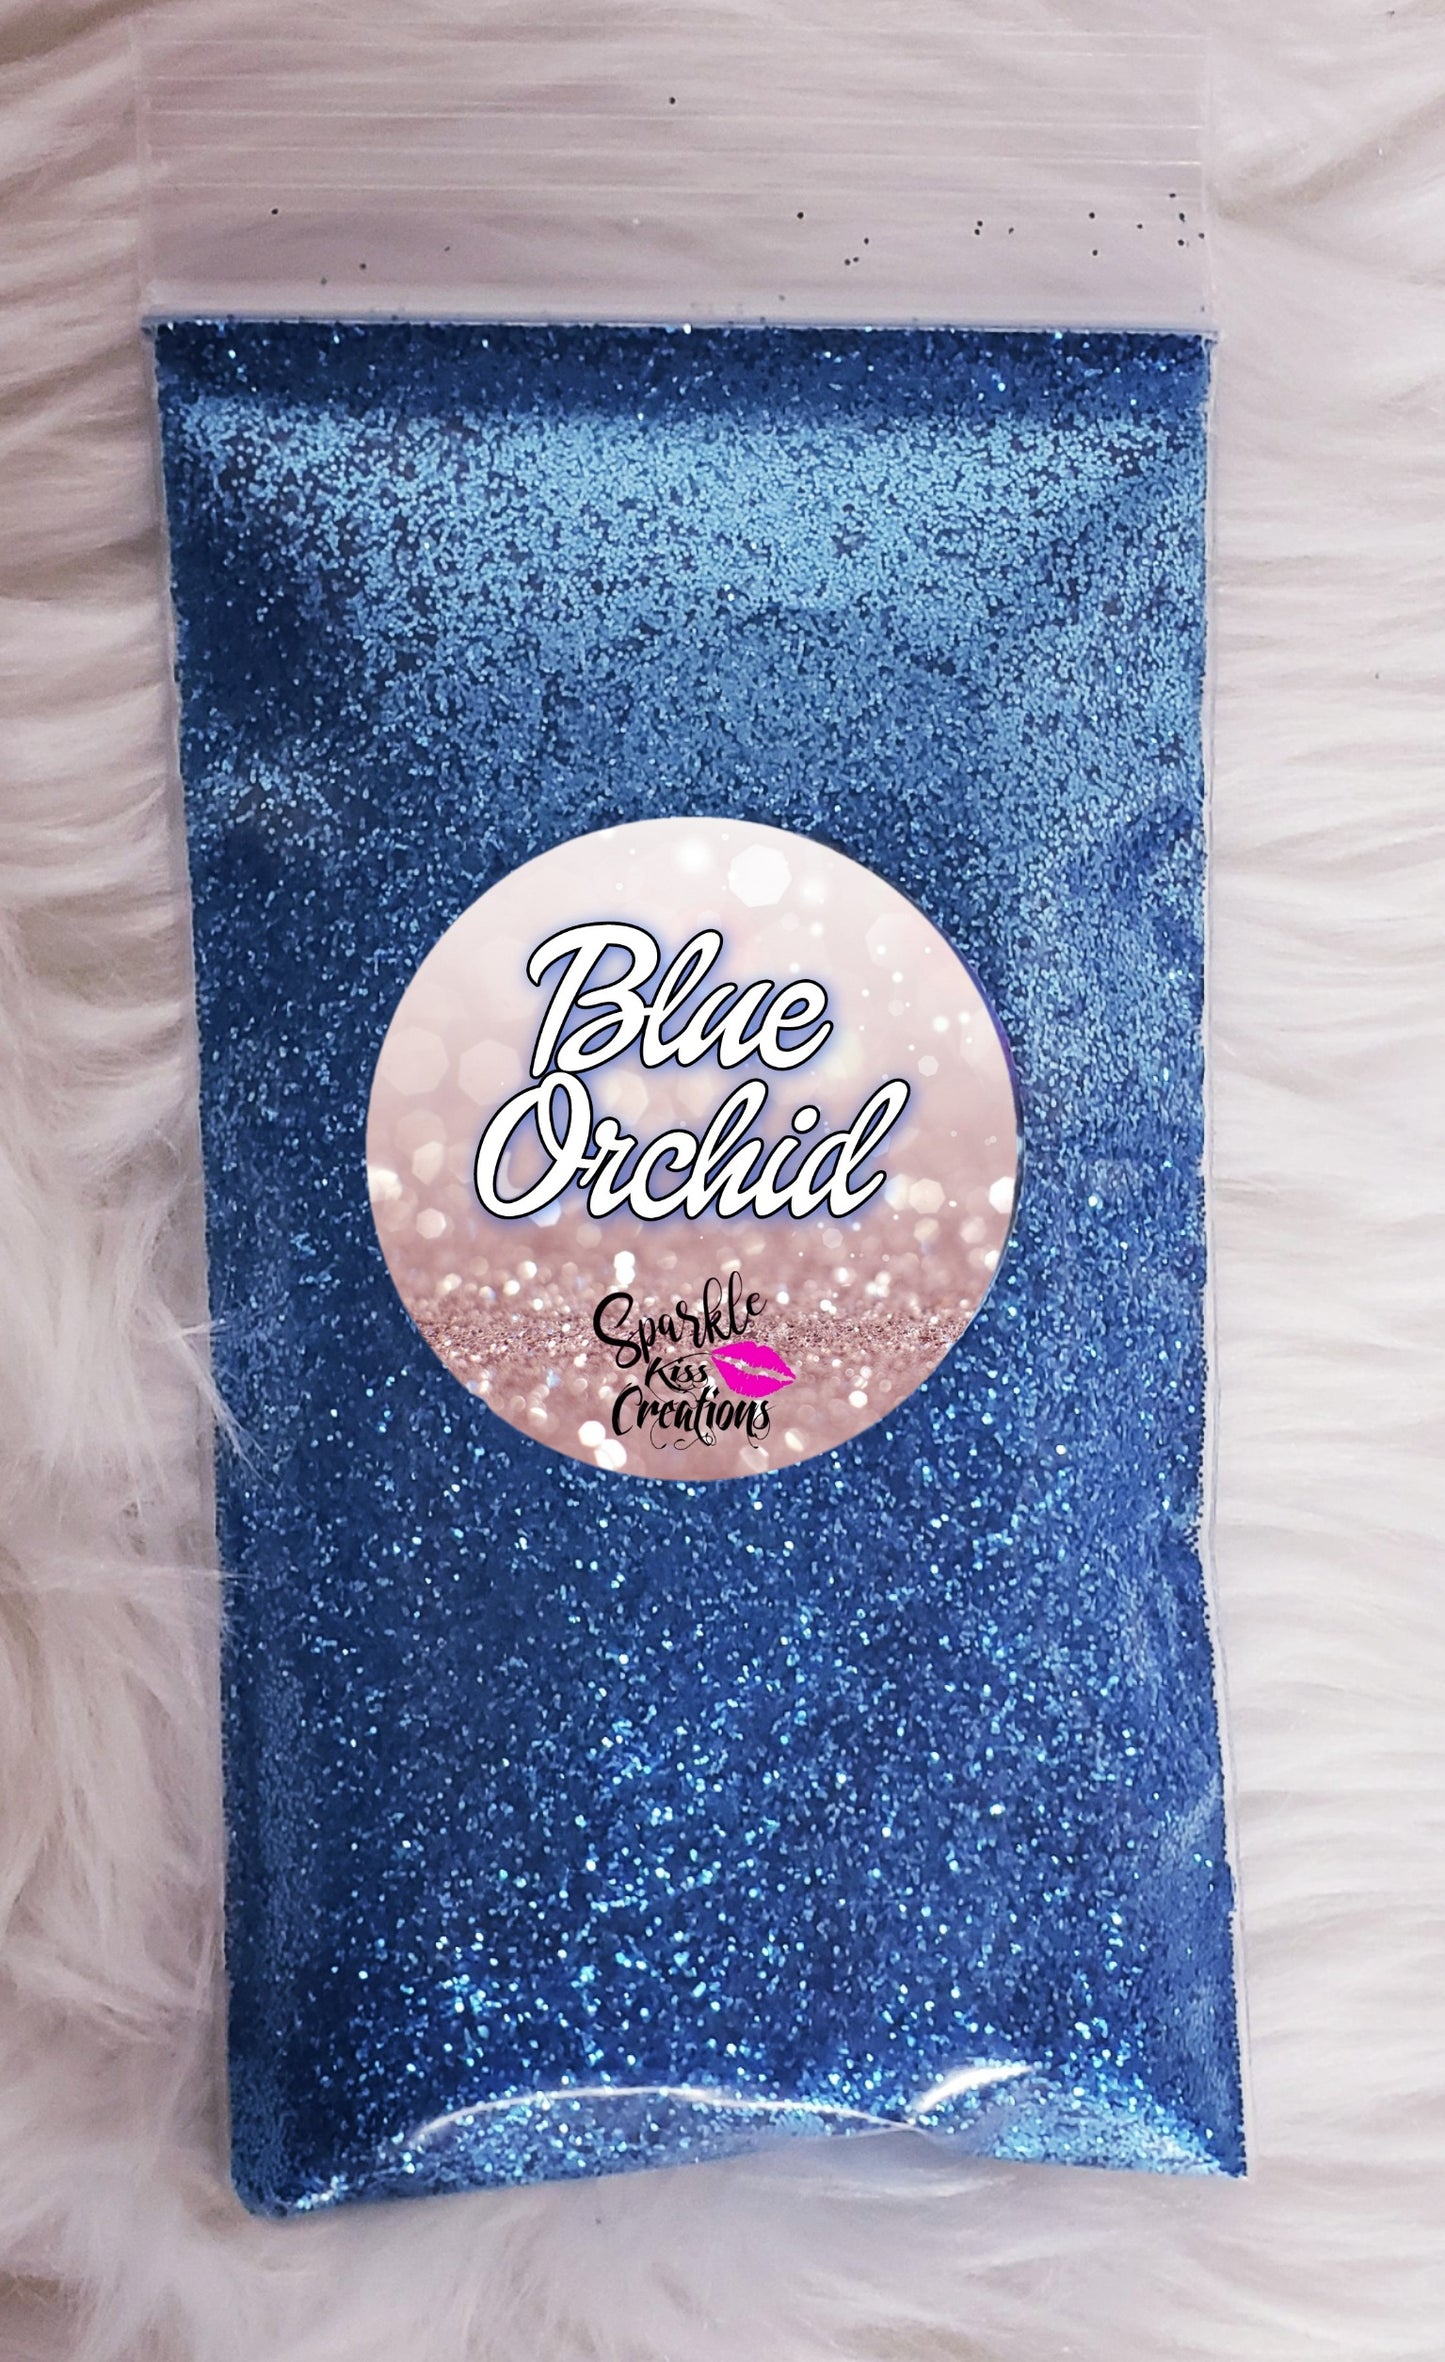 Blue Orchid-Sparkle Kiss Creations Glitz Glitter